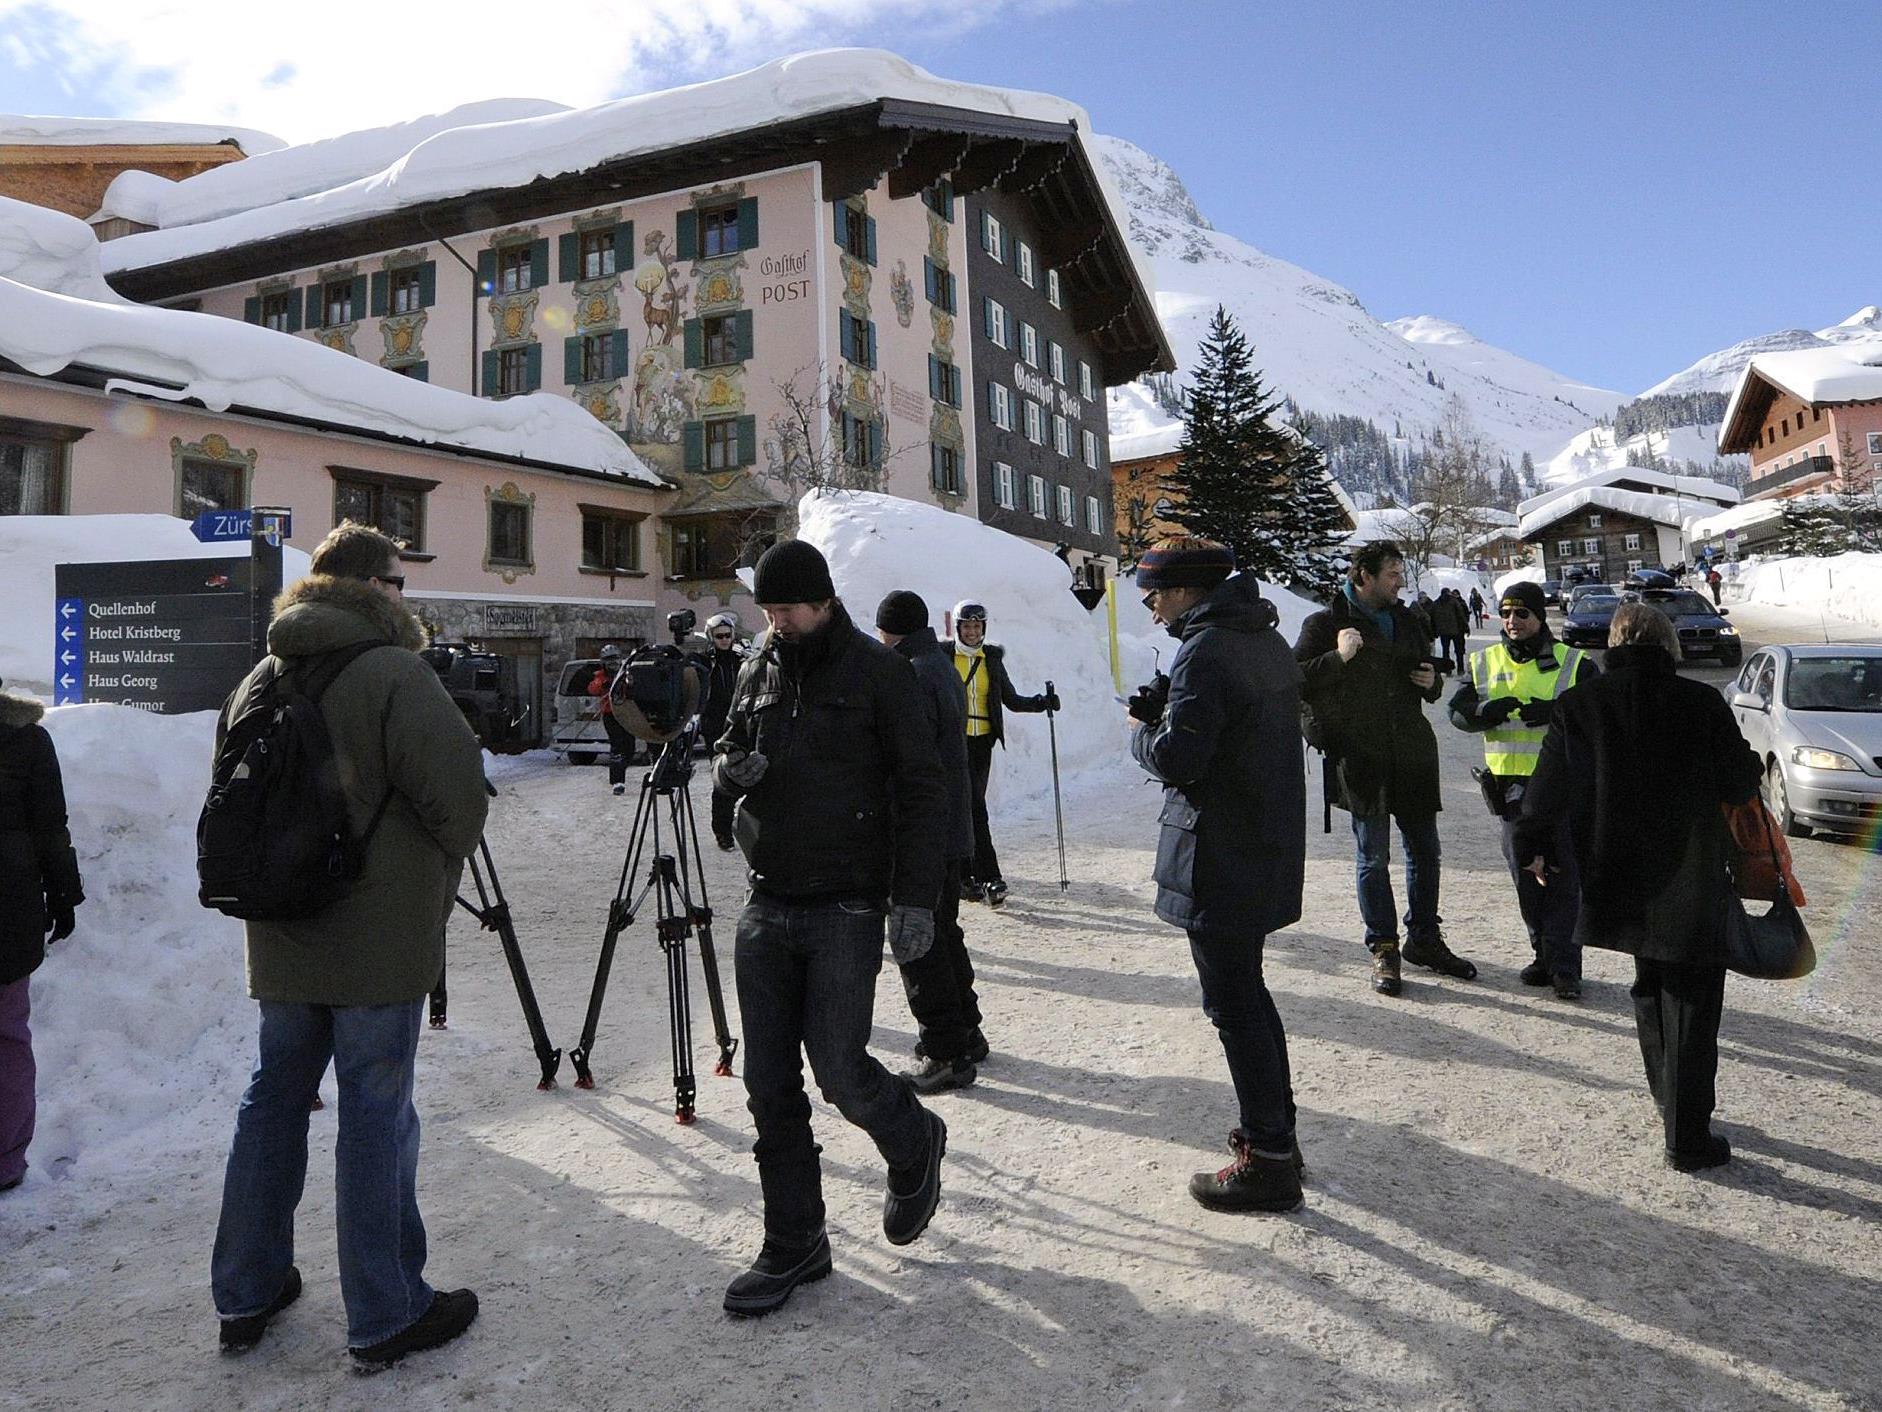 Medienleute "belagern" das Hotel Post in Lech.